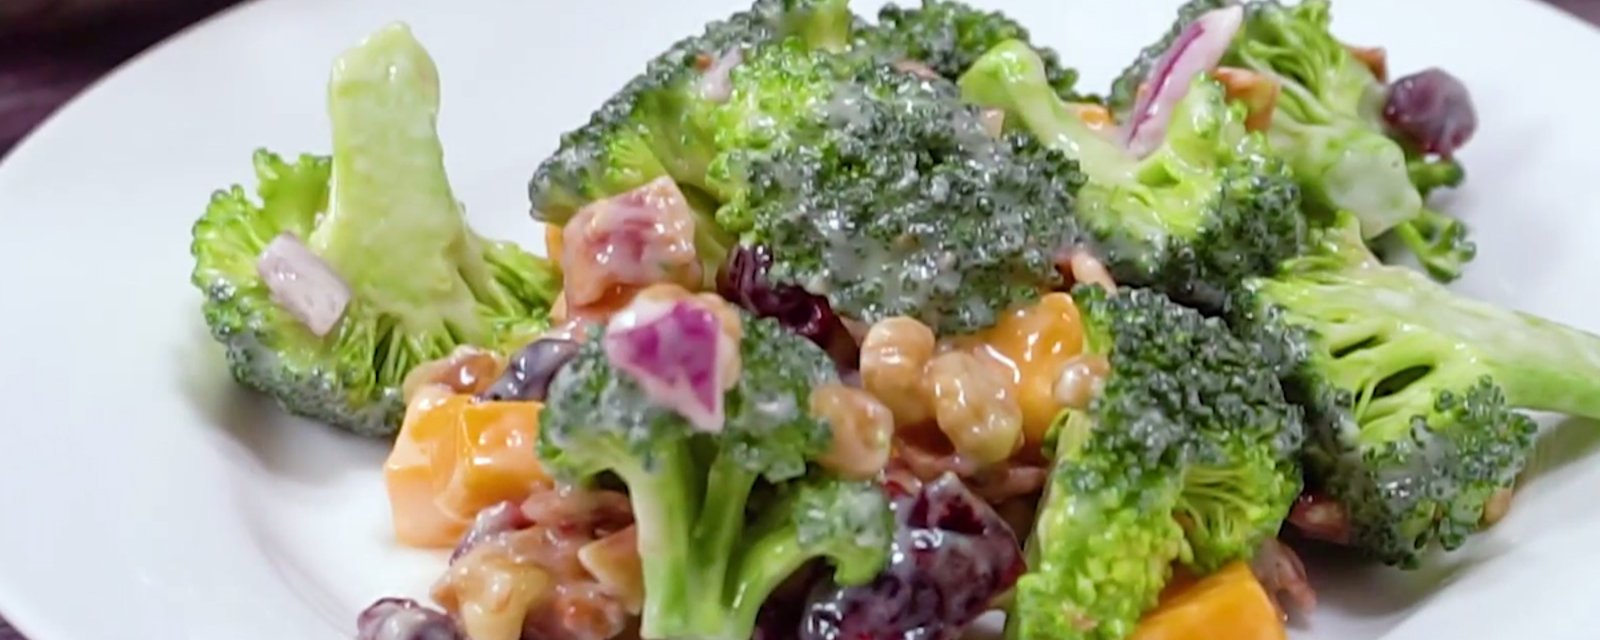 Salade de brocoli au bacon croustillant et au cheddar